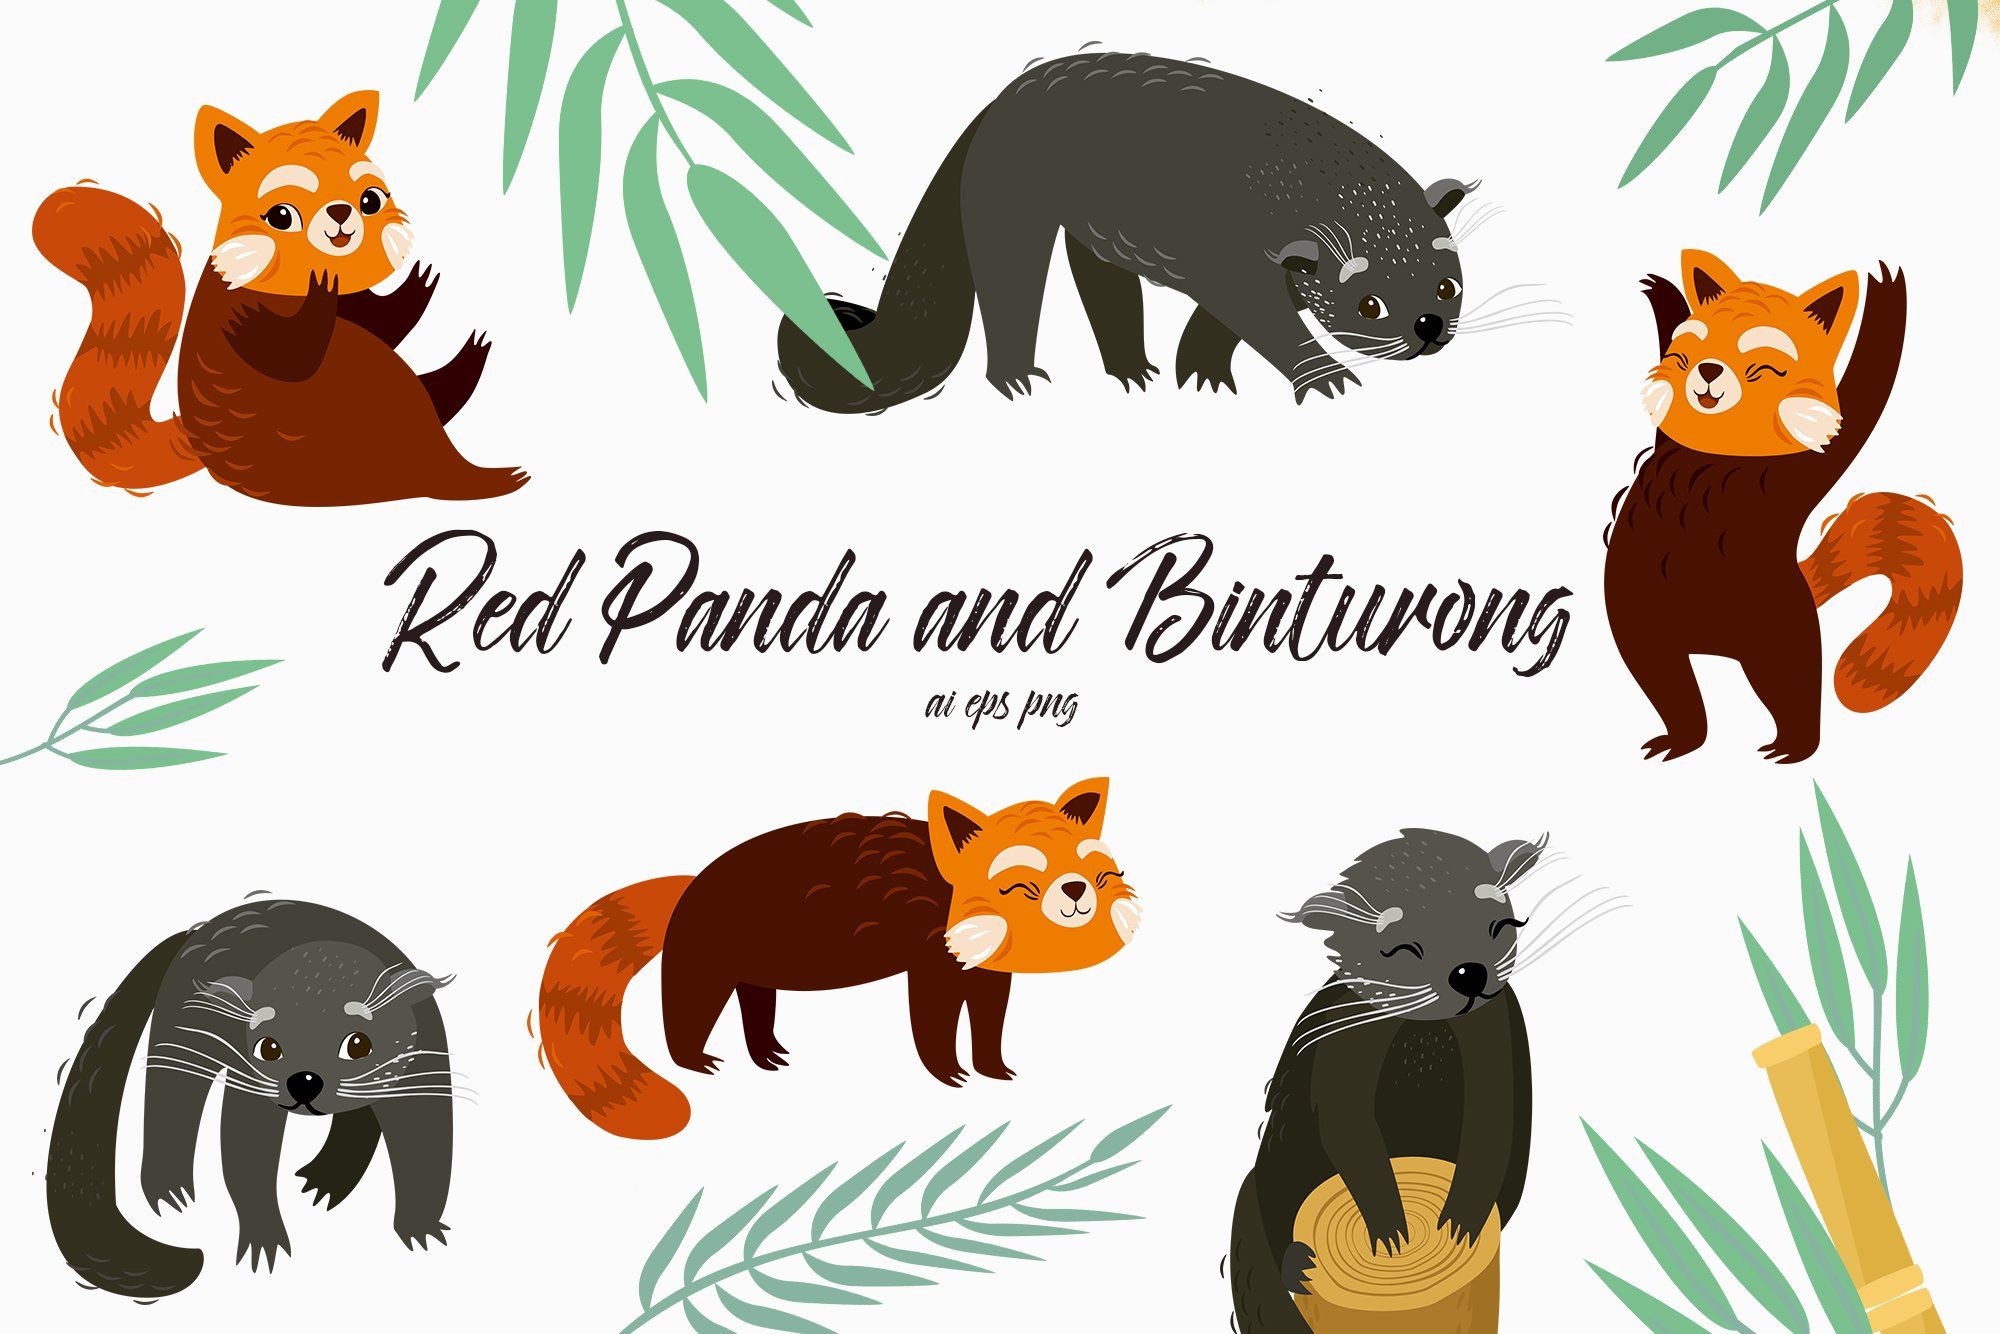 Бинтуронг и красная Панда